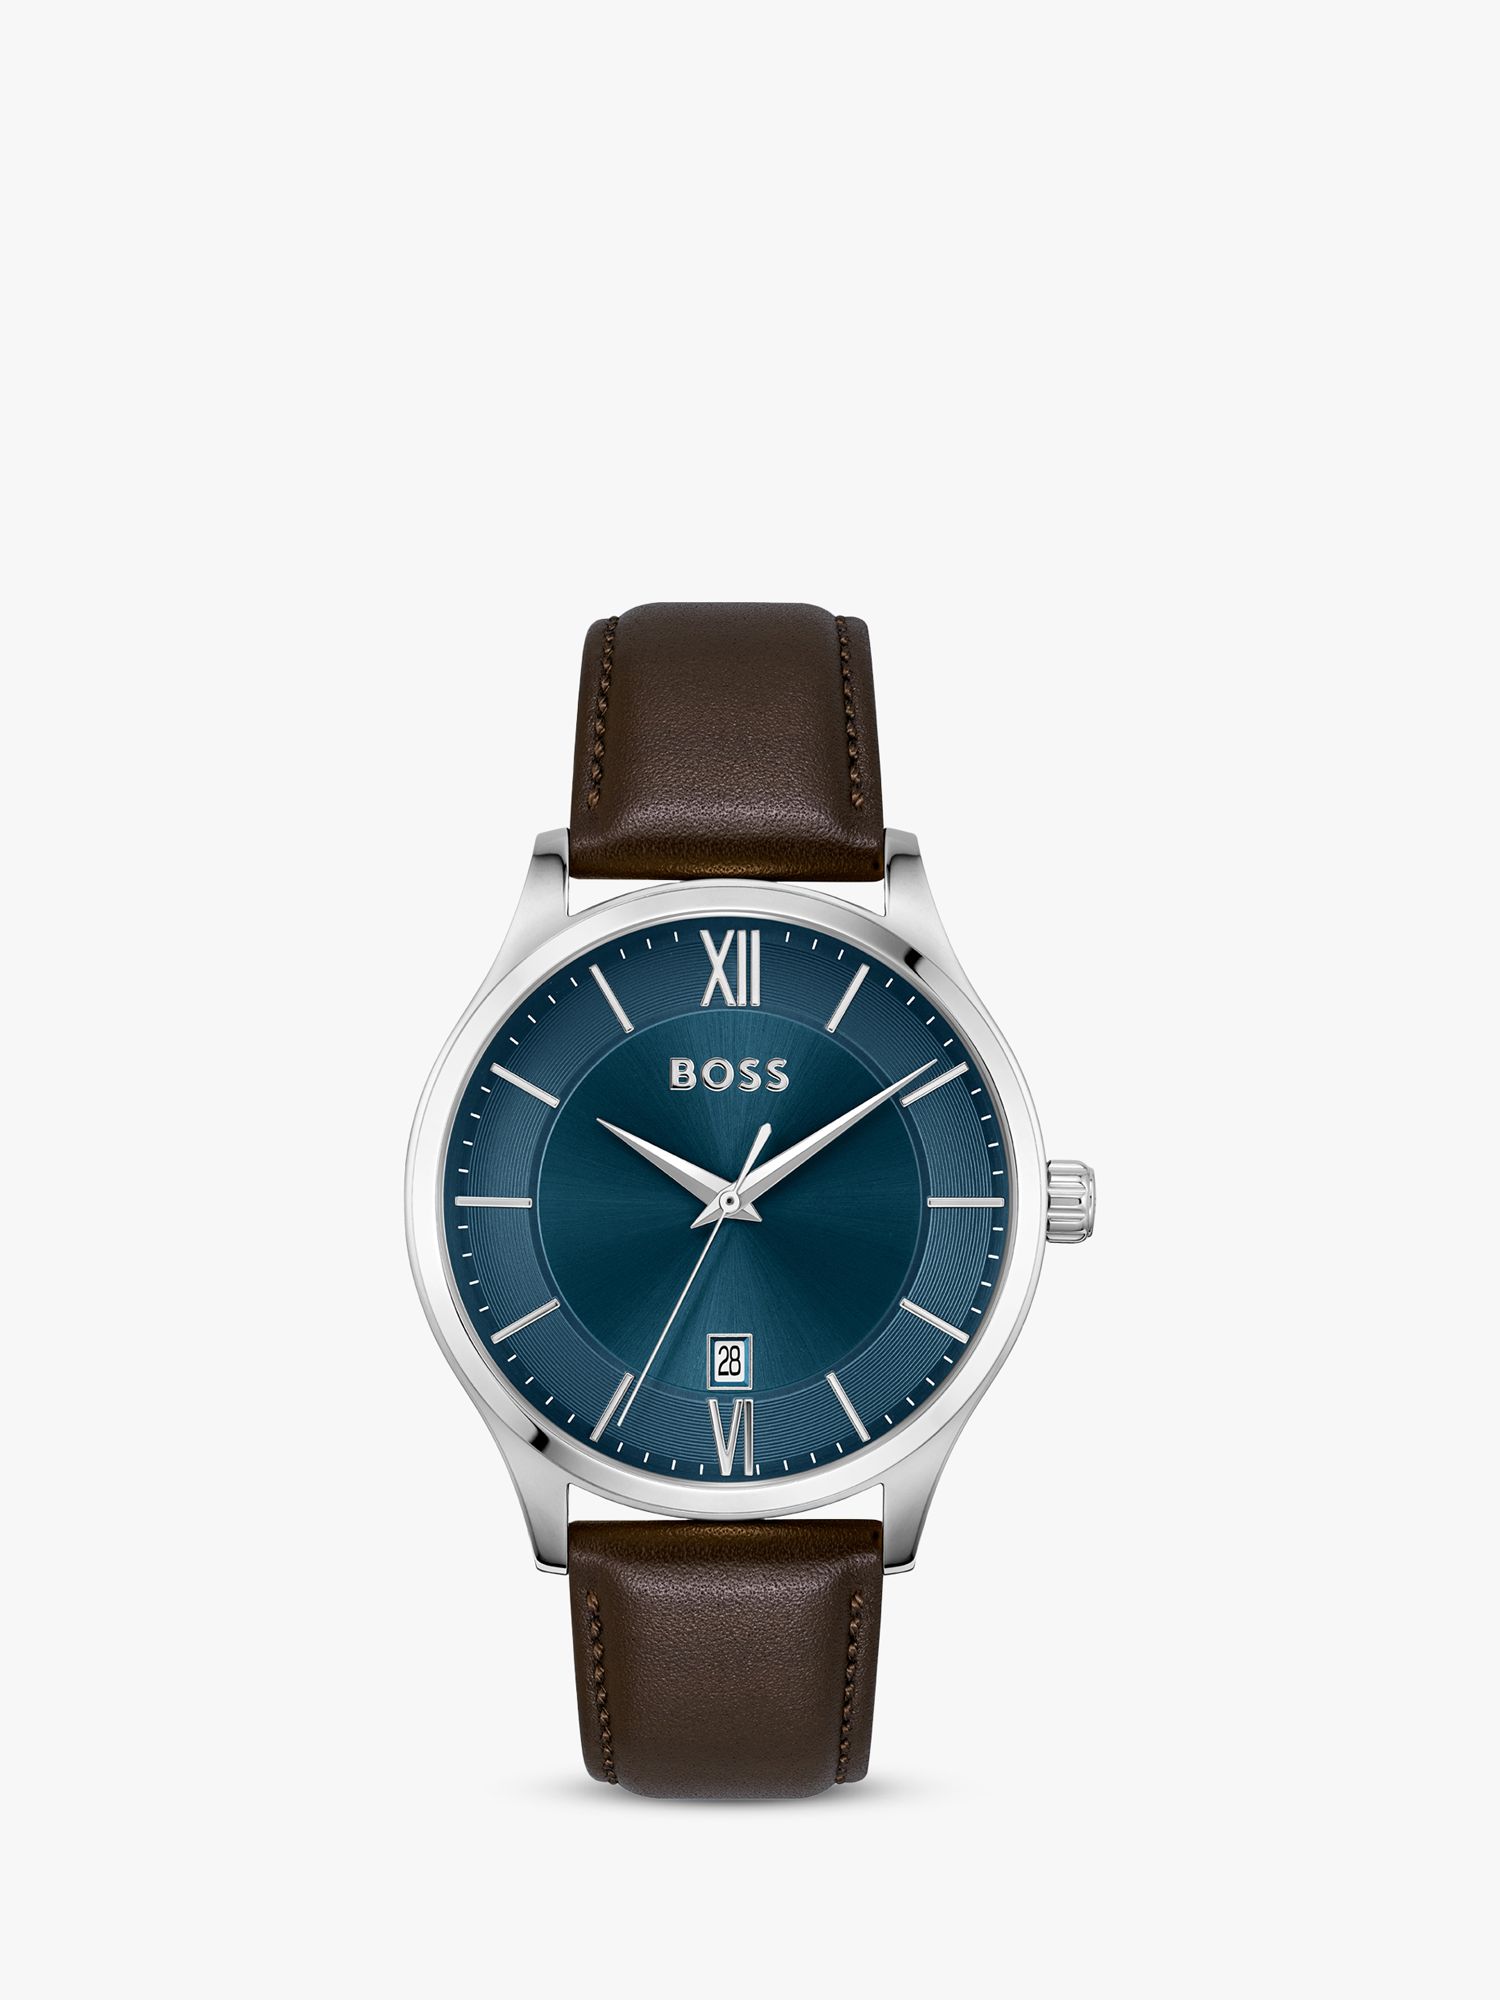 BOSS Men's Elite Date Leather Strap Watch, Brown/Blue 1513955 at John ...